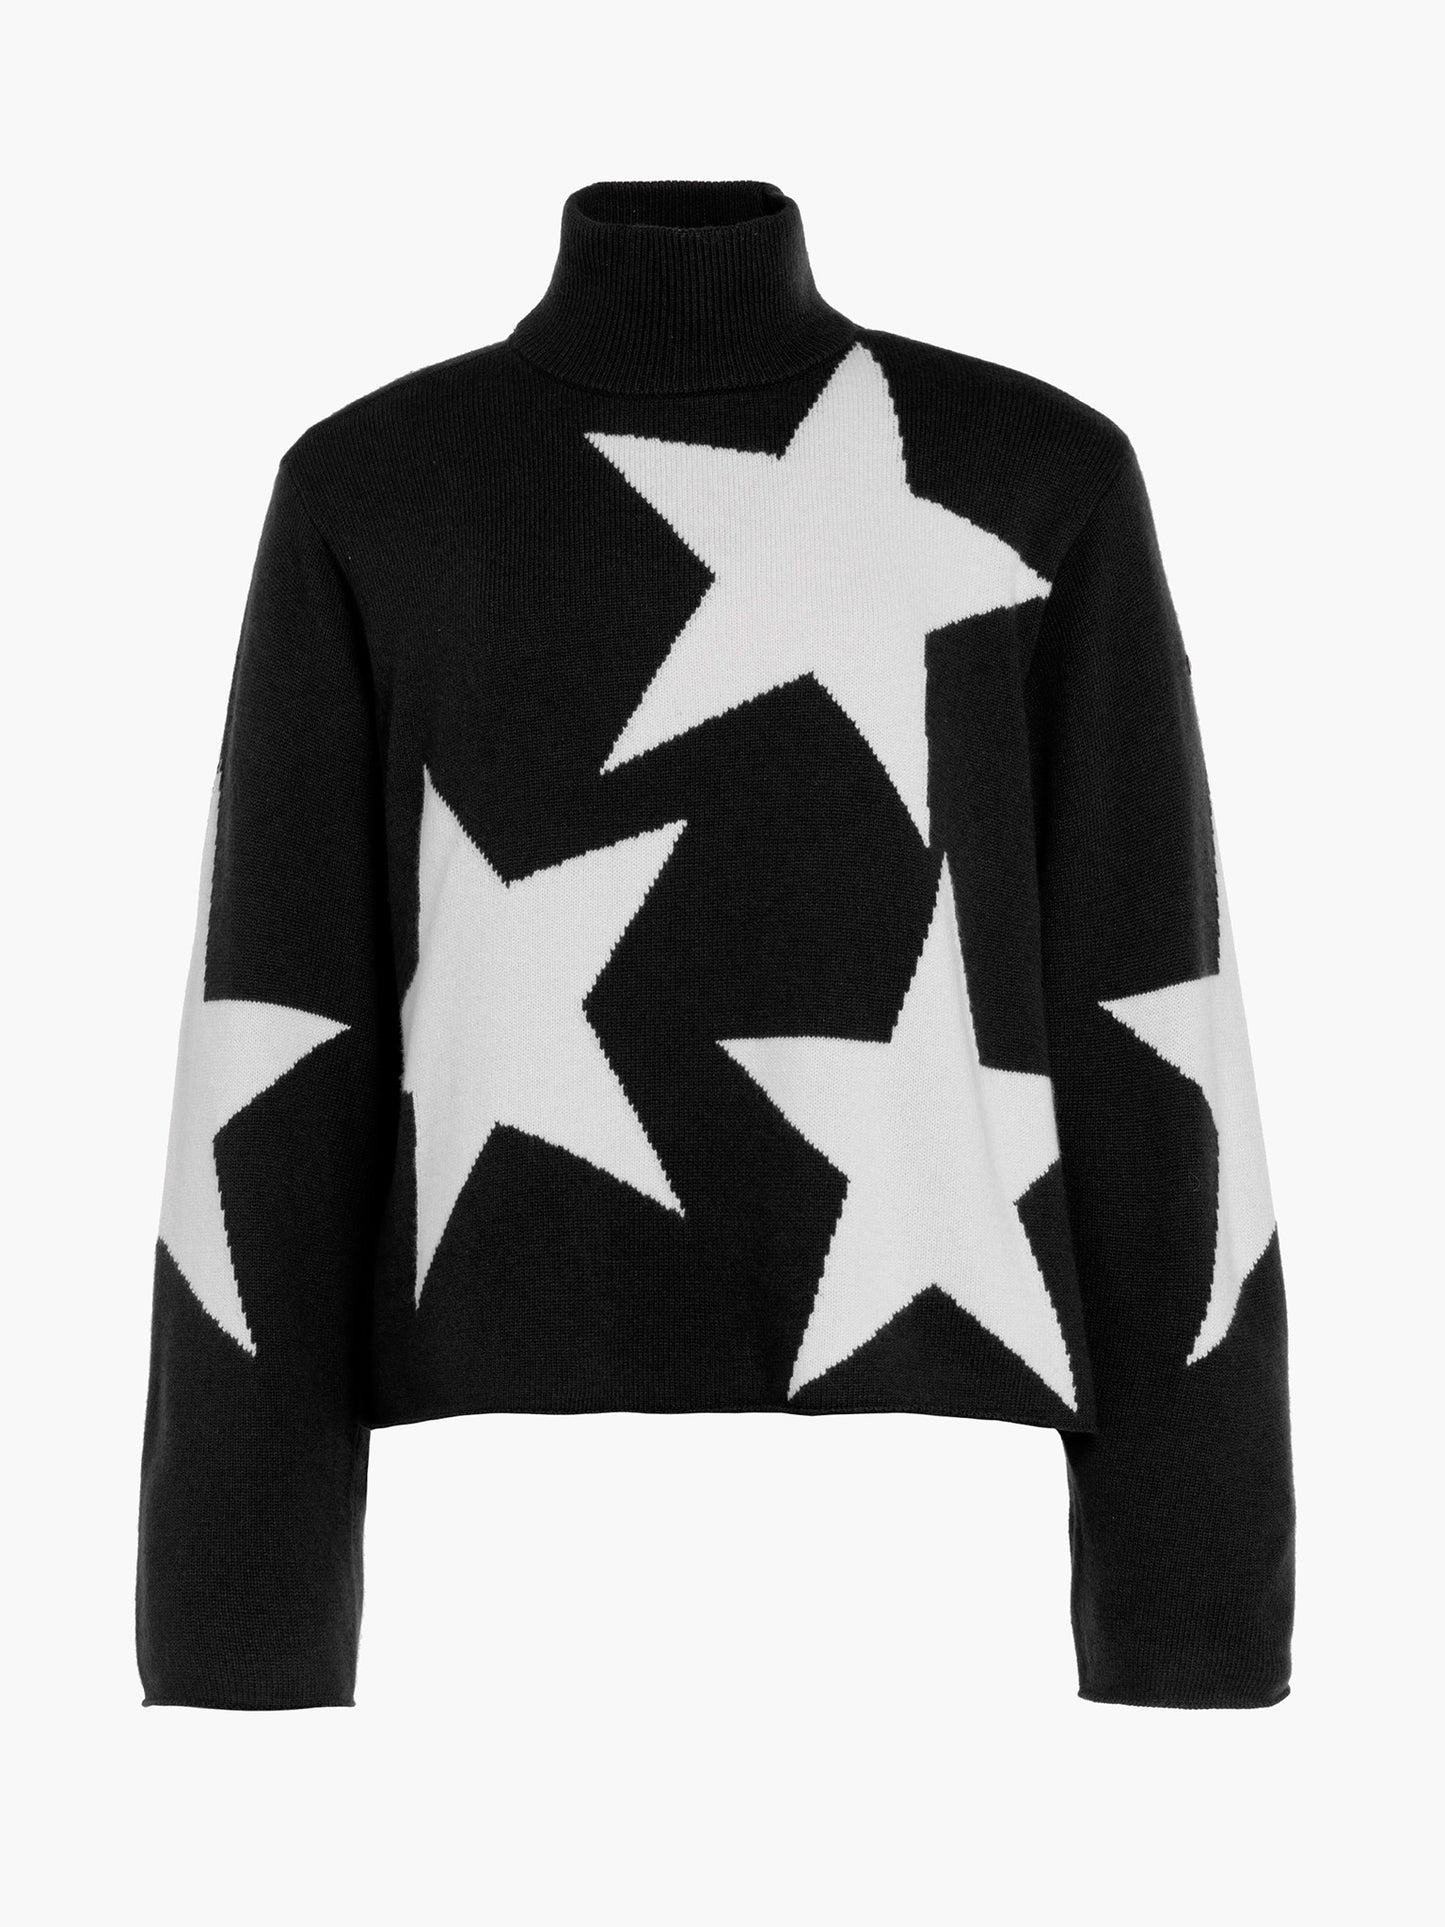 RISING STAR long sleeve knit sweater